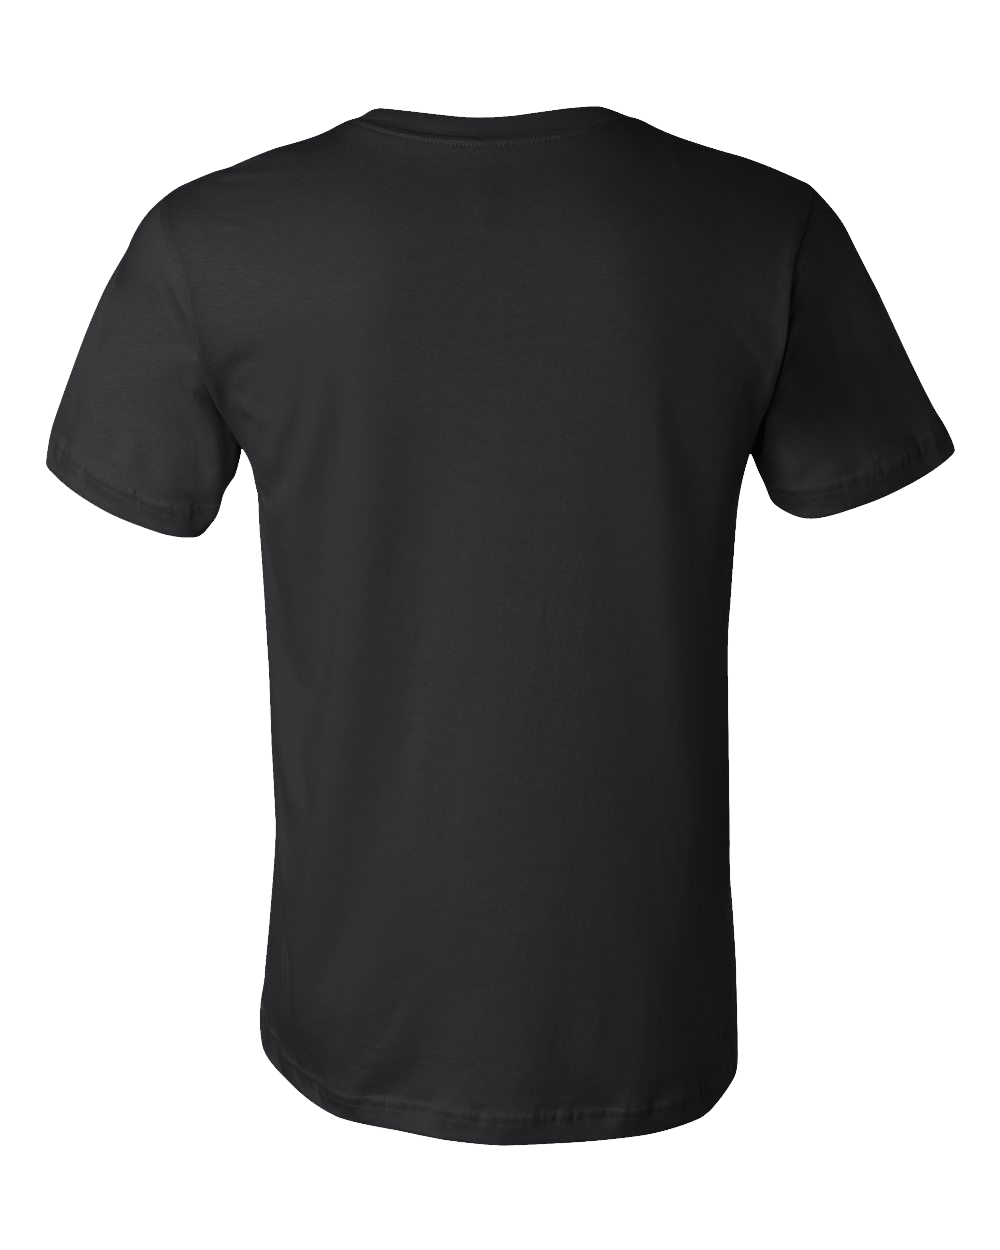 Standard Black Ackley, IA | Retro, Vintage Style Iowa Pride  T-shirt